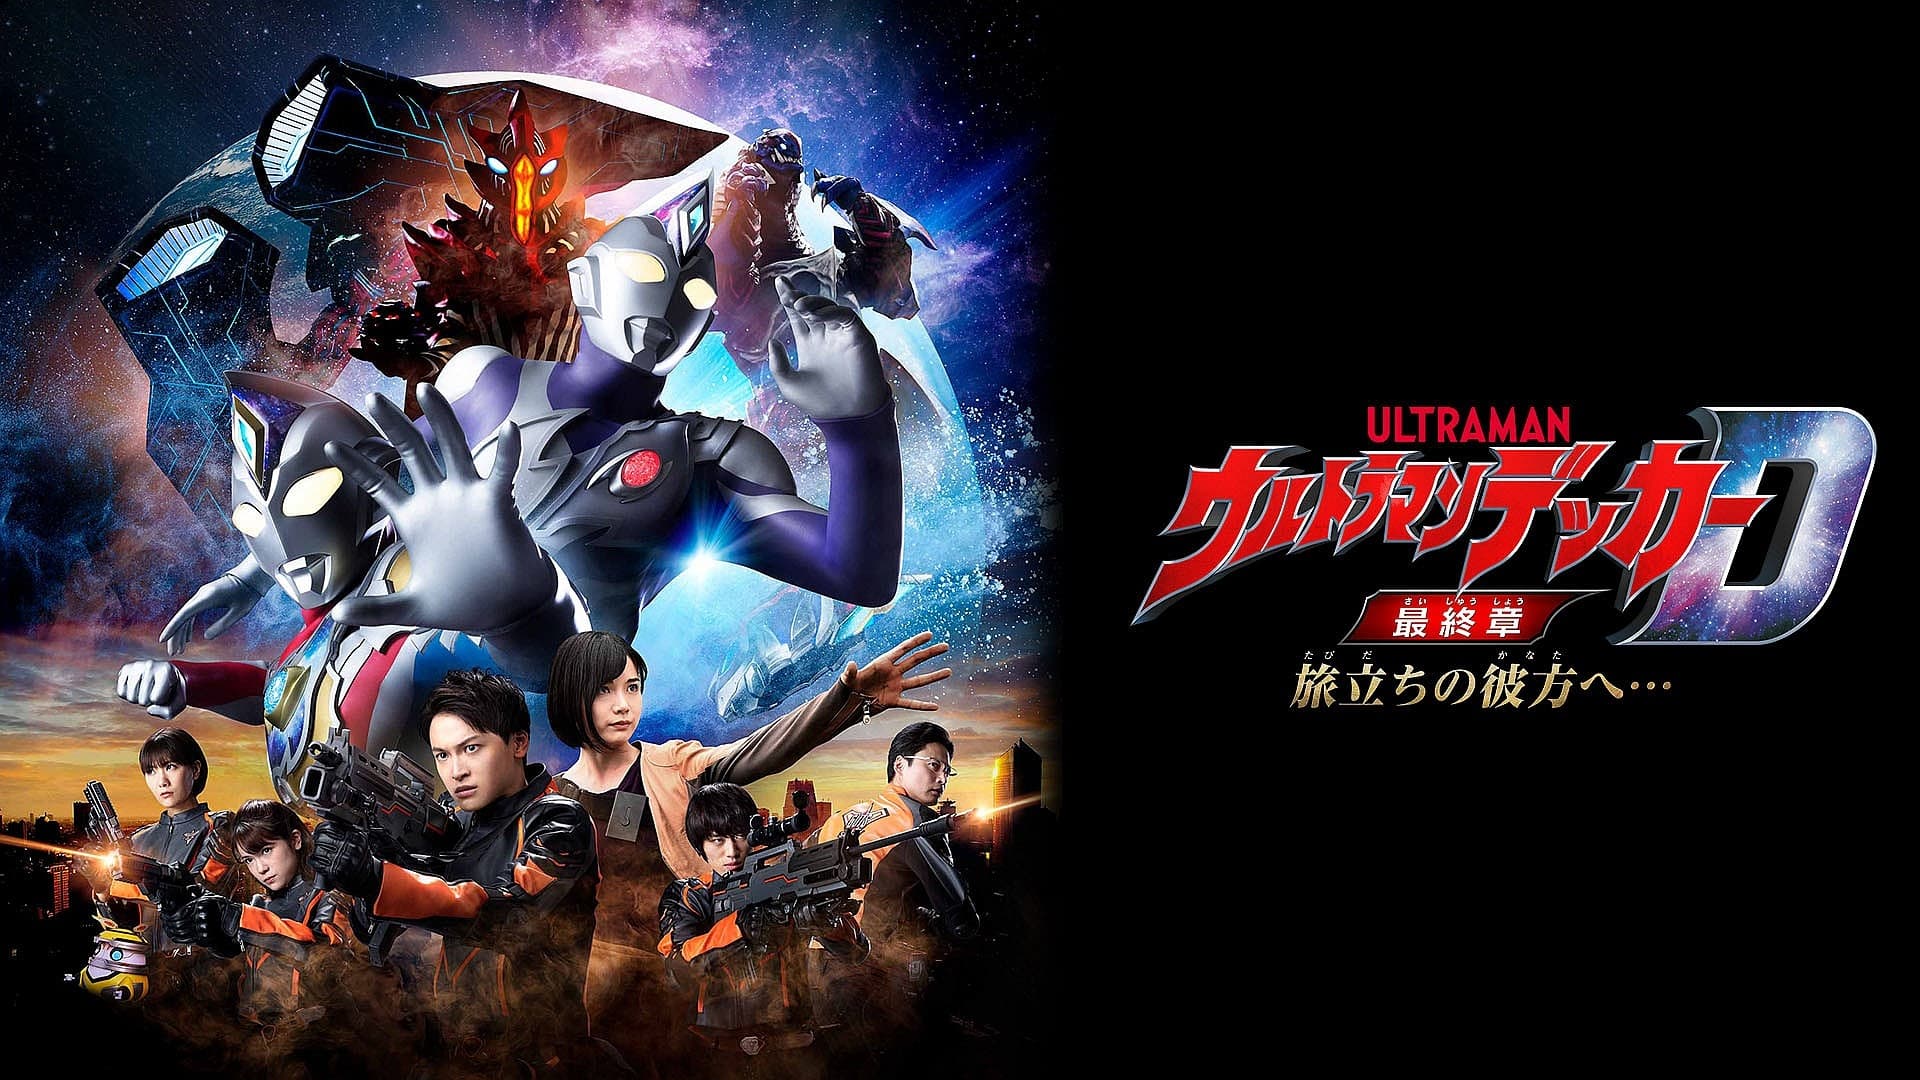 Ultraman Decker Finale: Journey to Beyond